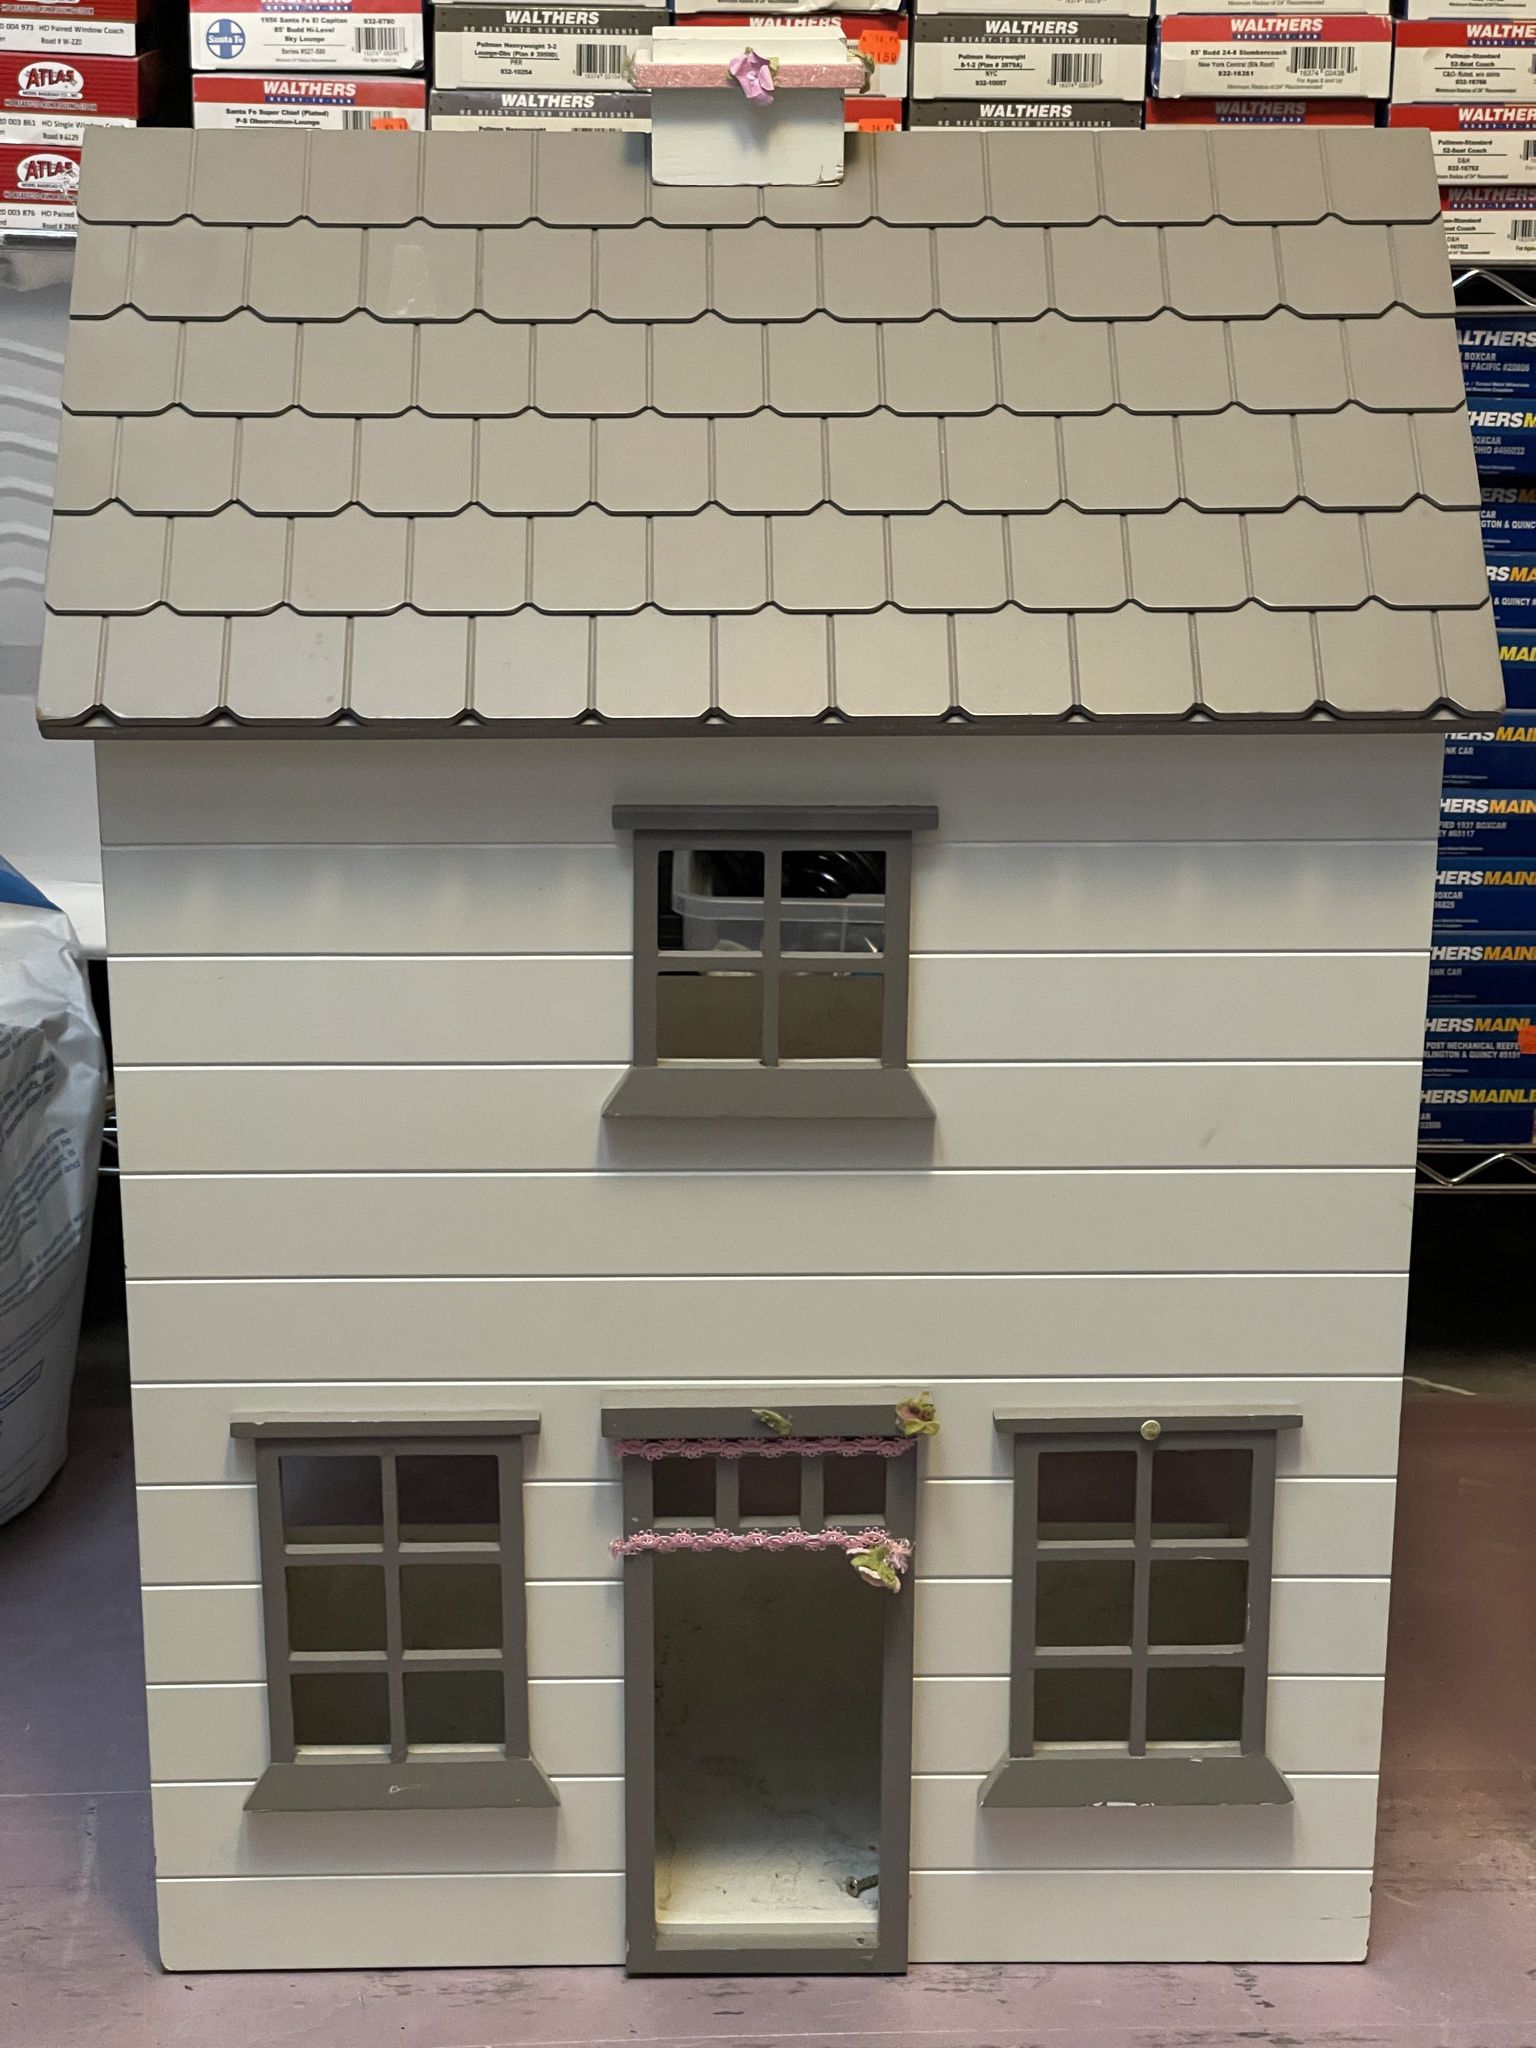 Pottery Barn Doll House